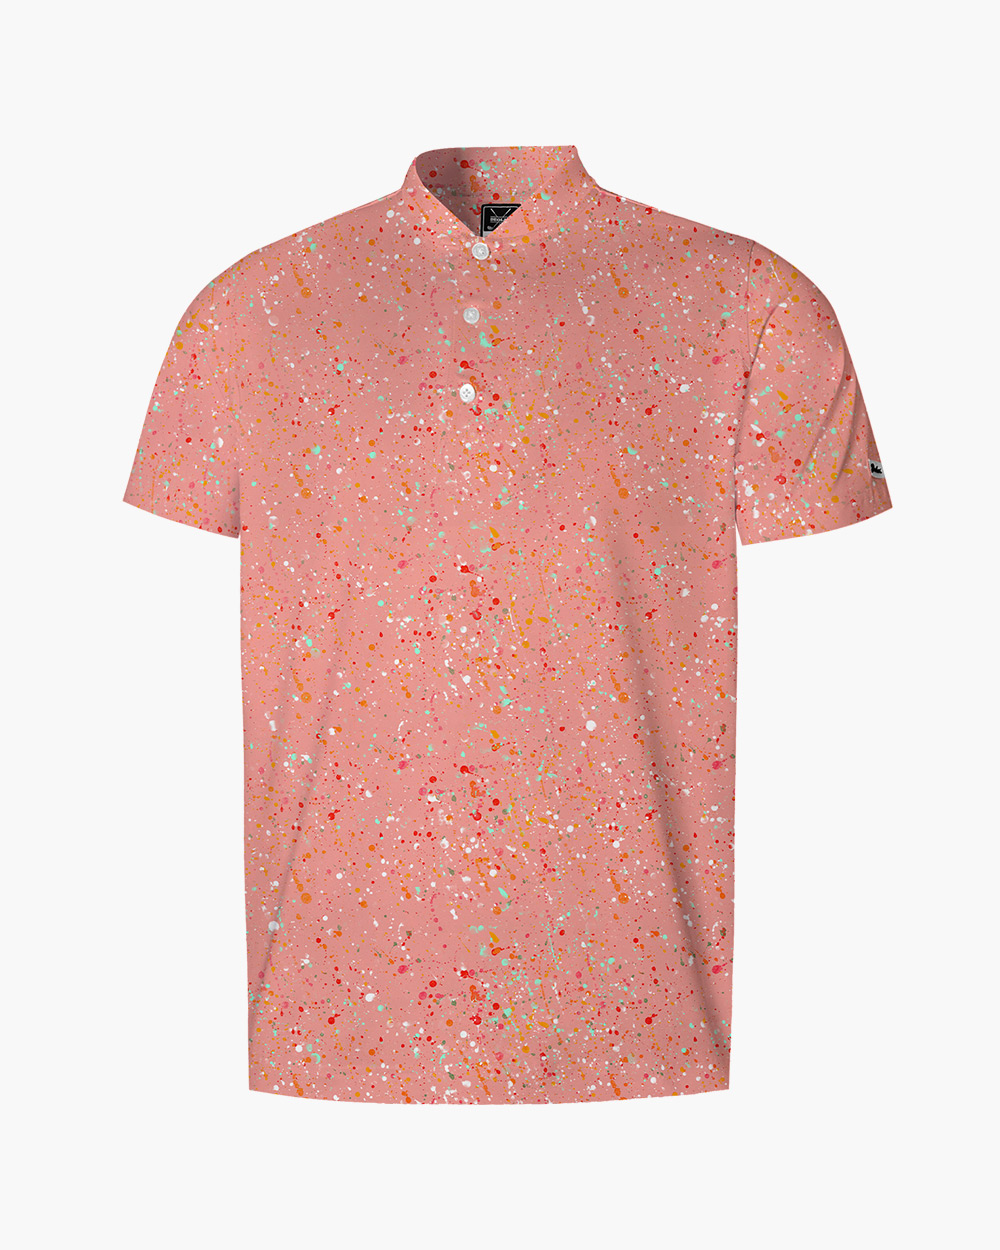 Pink-Hued Splashed Shirt